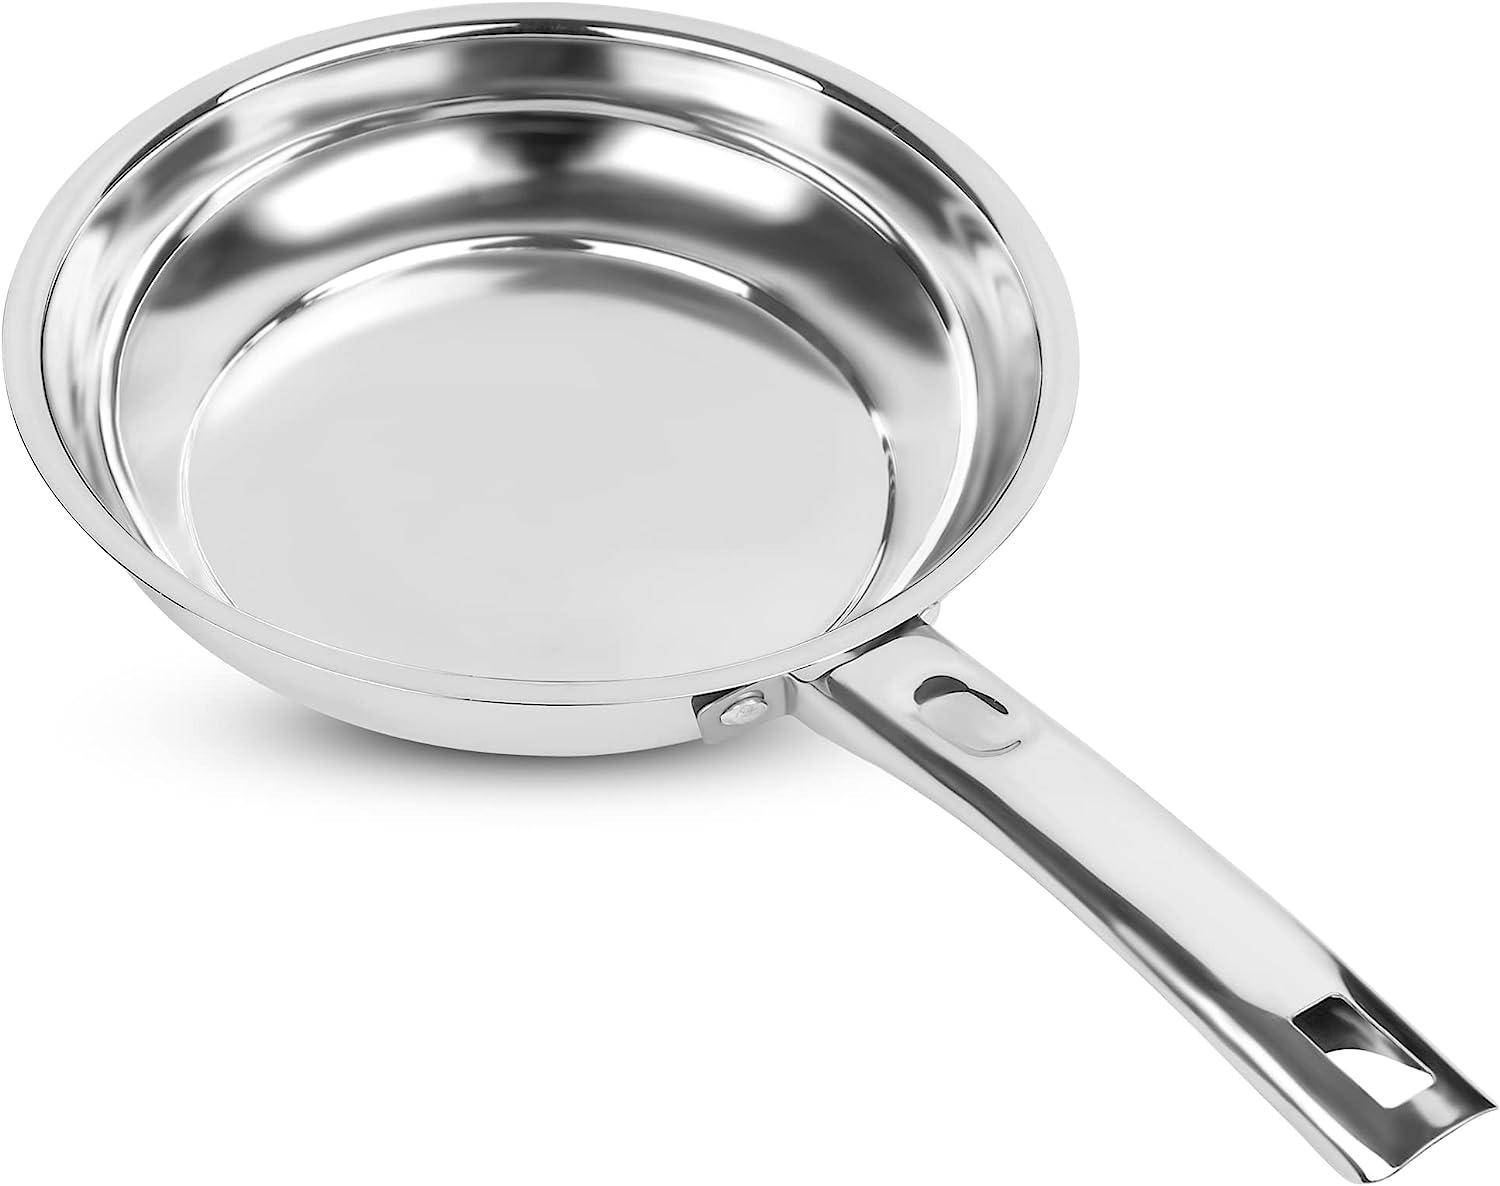 KSJONE Stainless Steel 9.5-inch Frying Pan, Pots and [...]